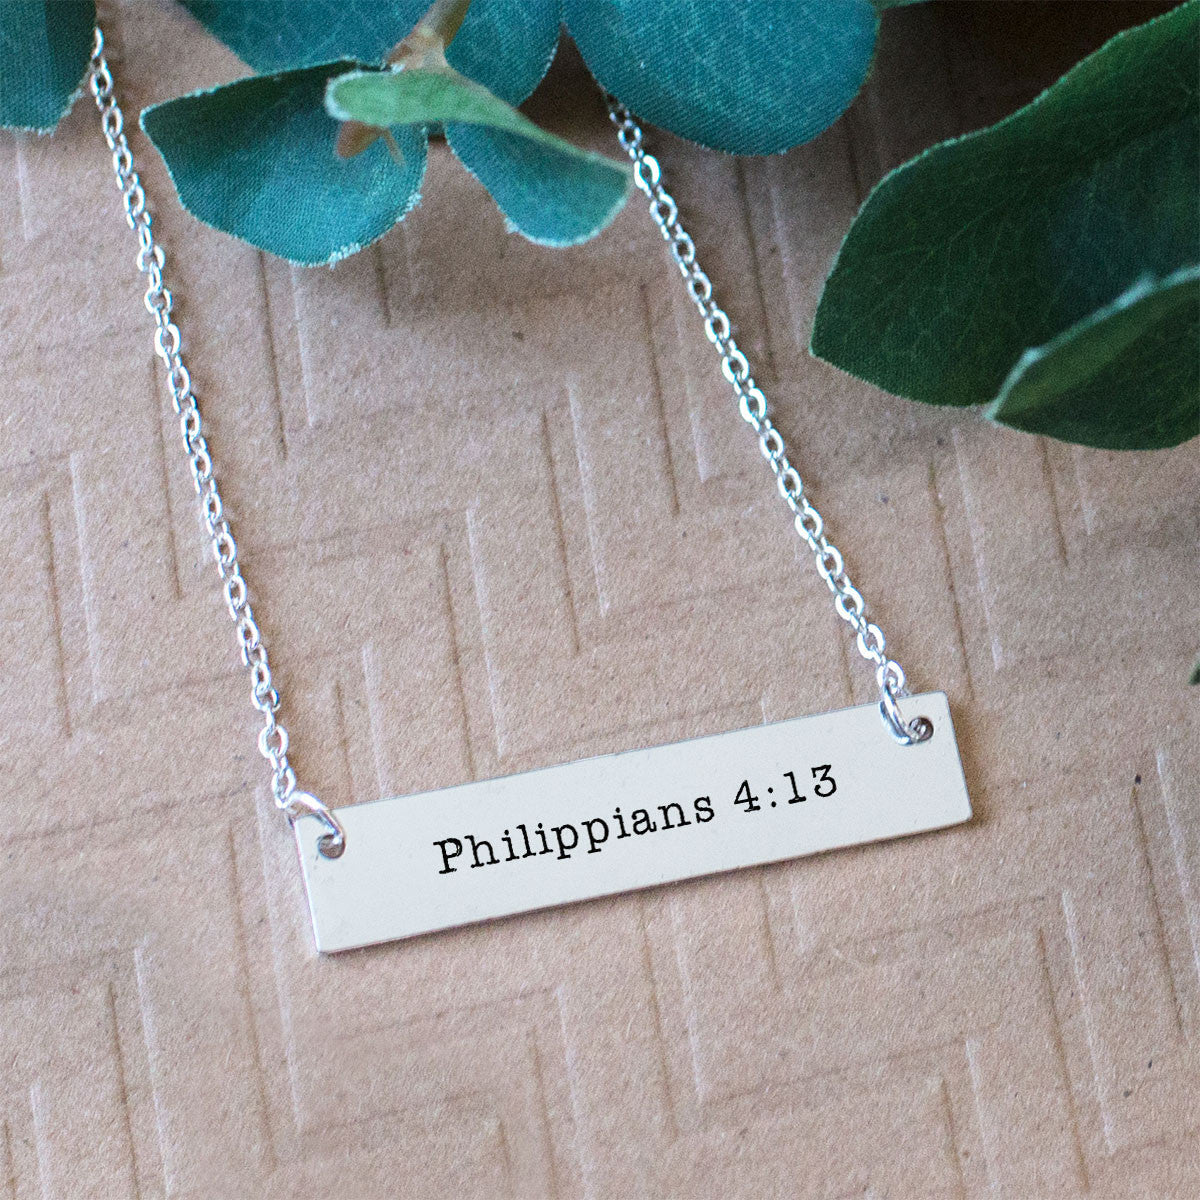 Philippians 4:13 Gold / Silver Bar Necklace